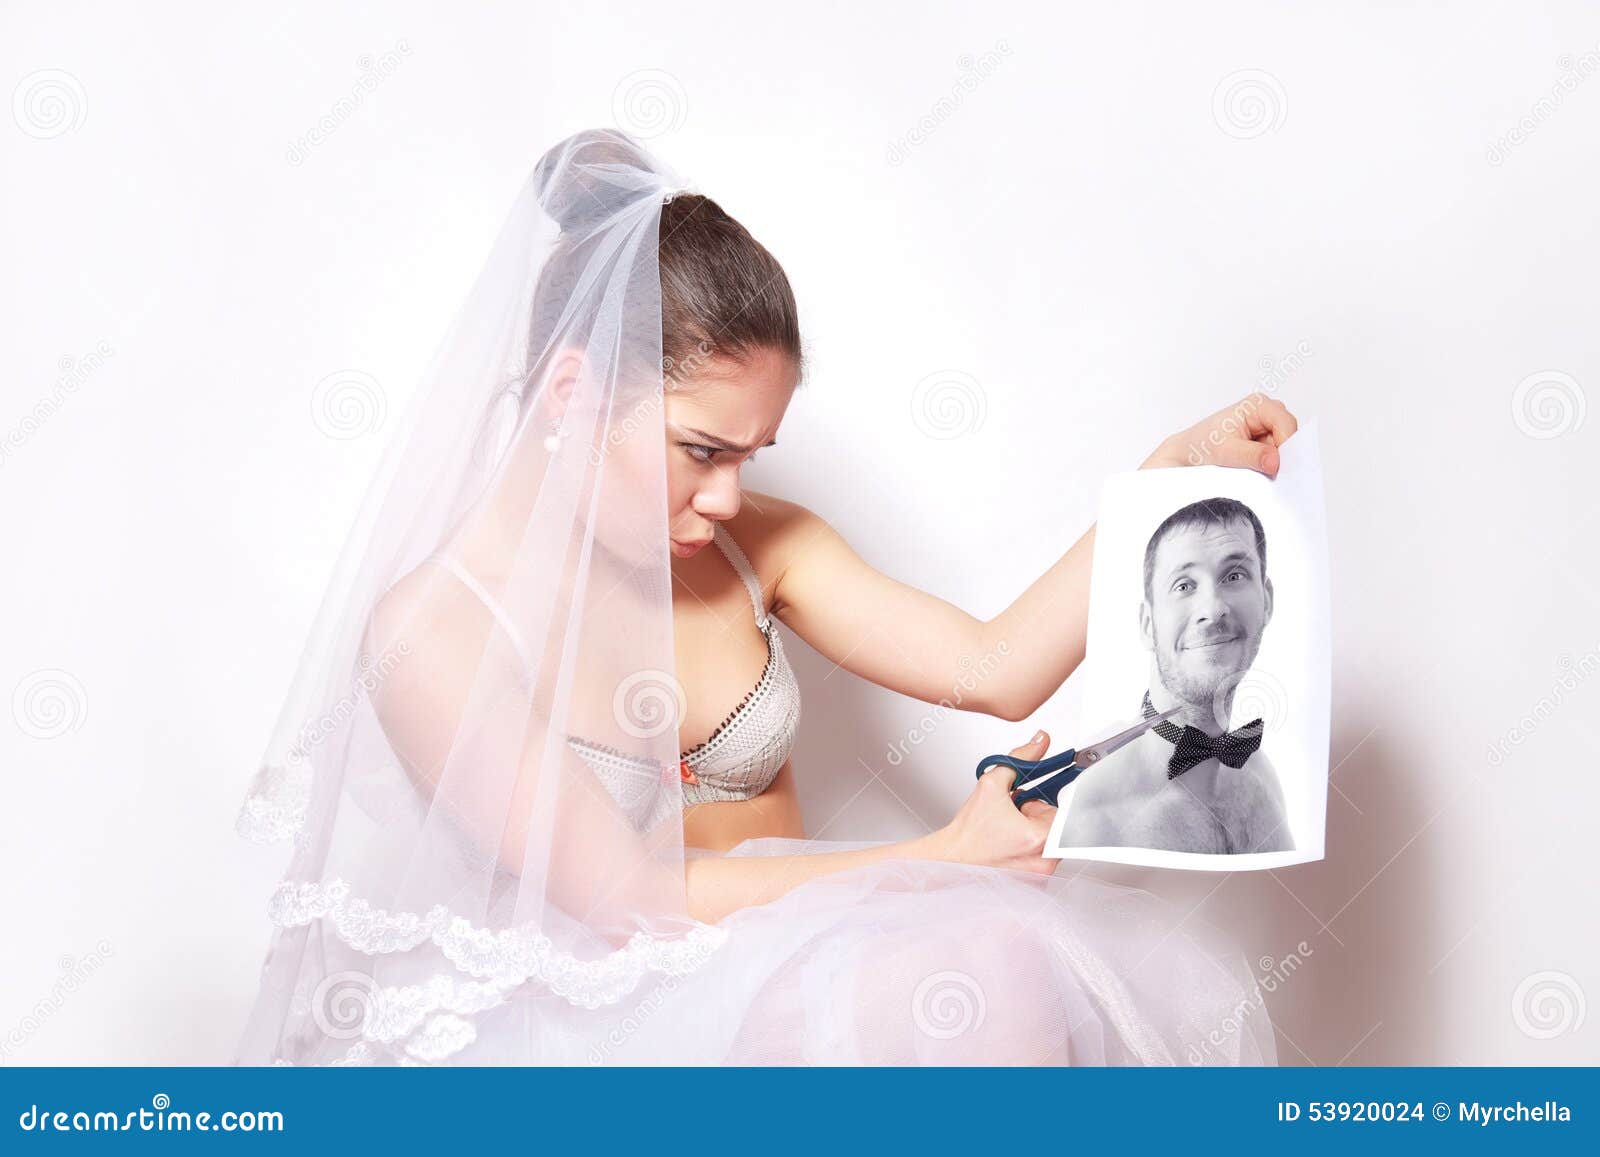 Bride scissor a photo which shows the groom. Bride scissor the photo which shows the groom, gray background